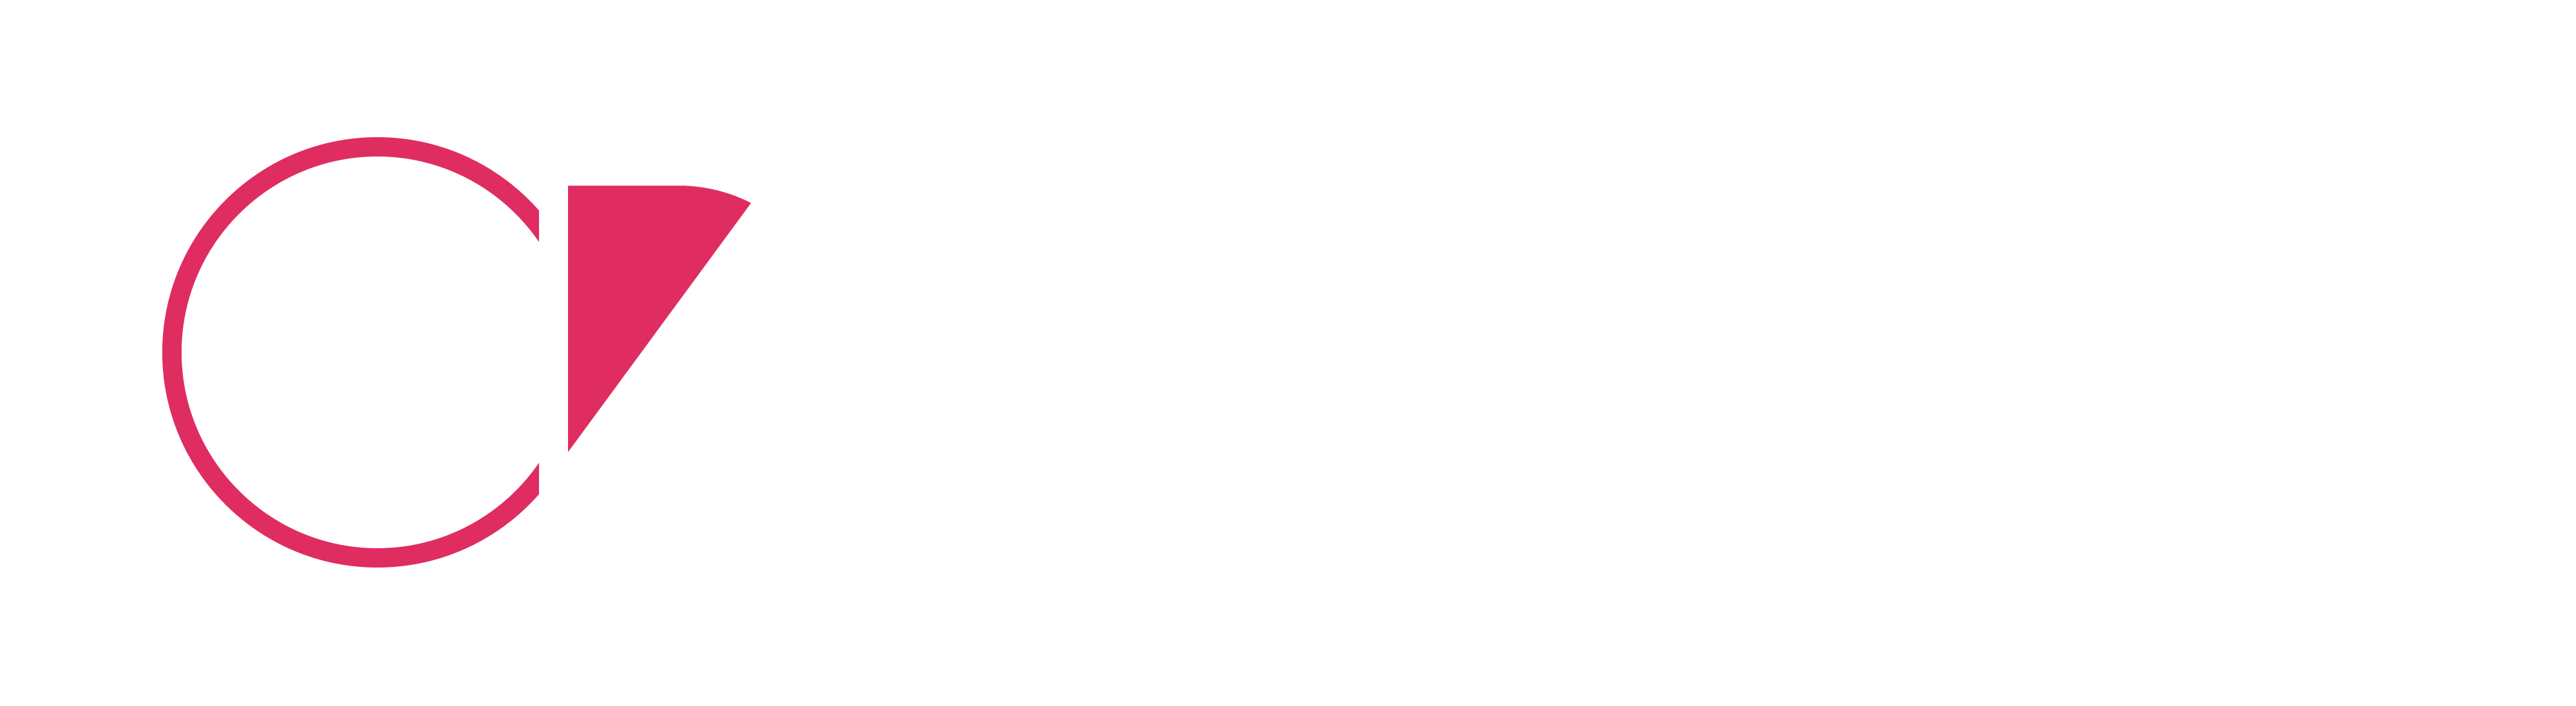 https://boxertools.eu/frontend/images/Logo-01.png